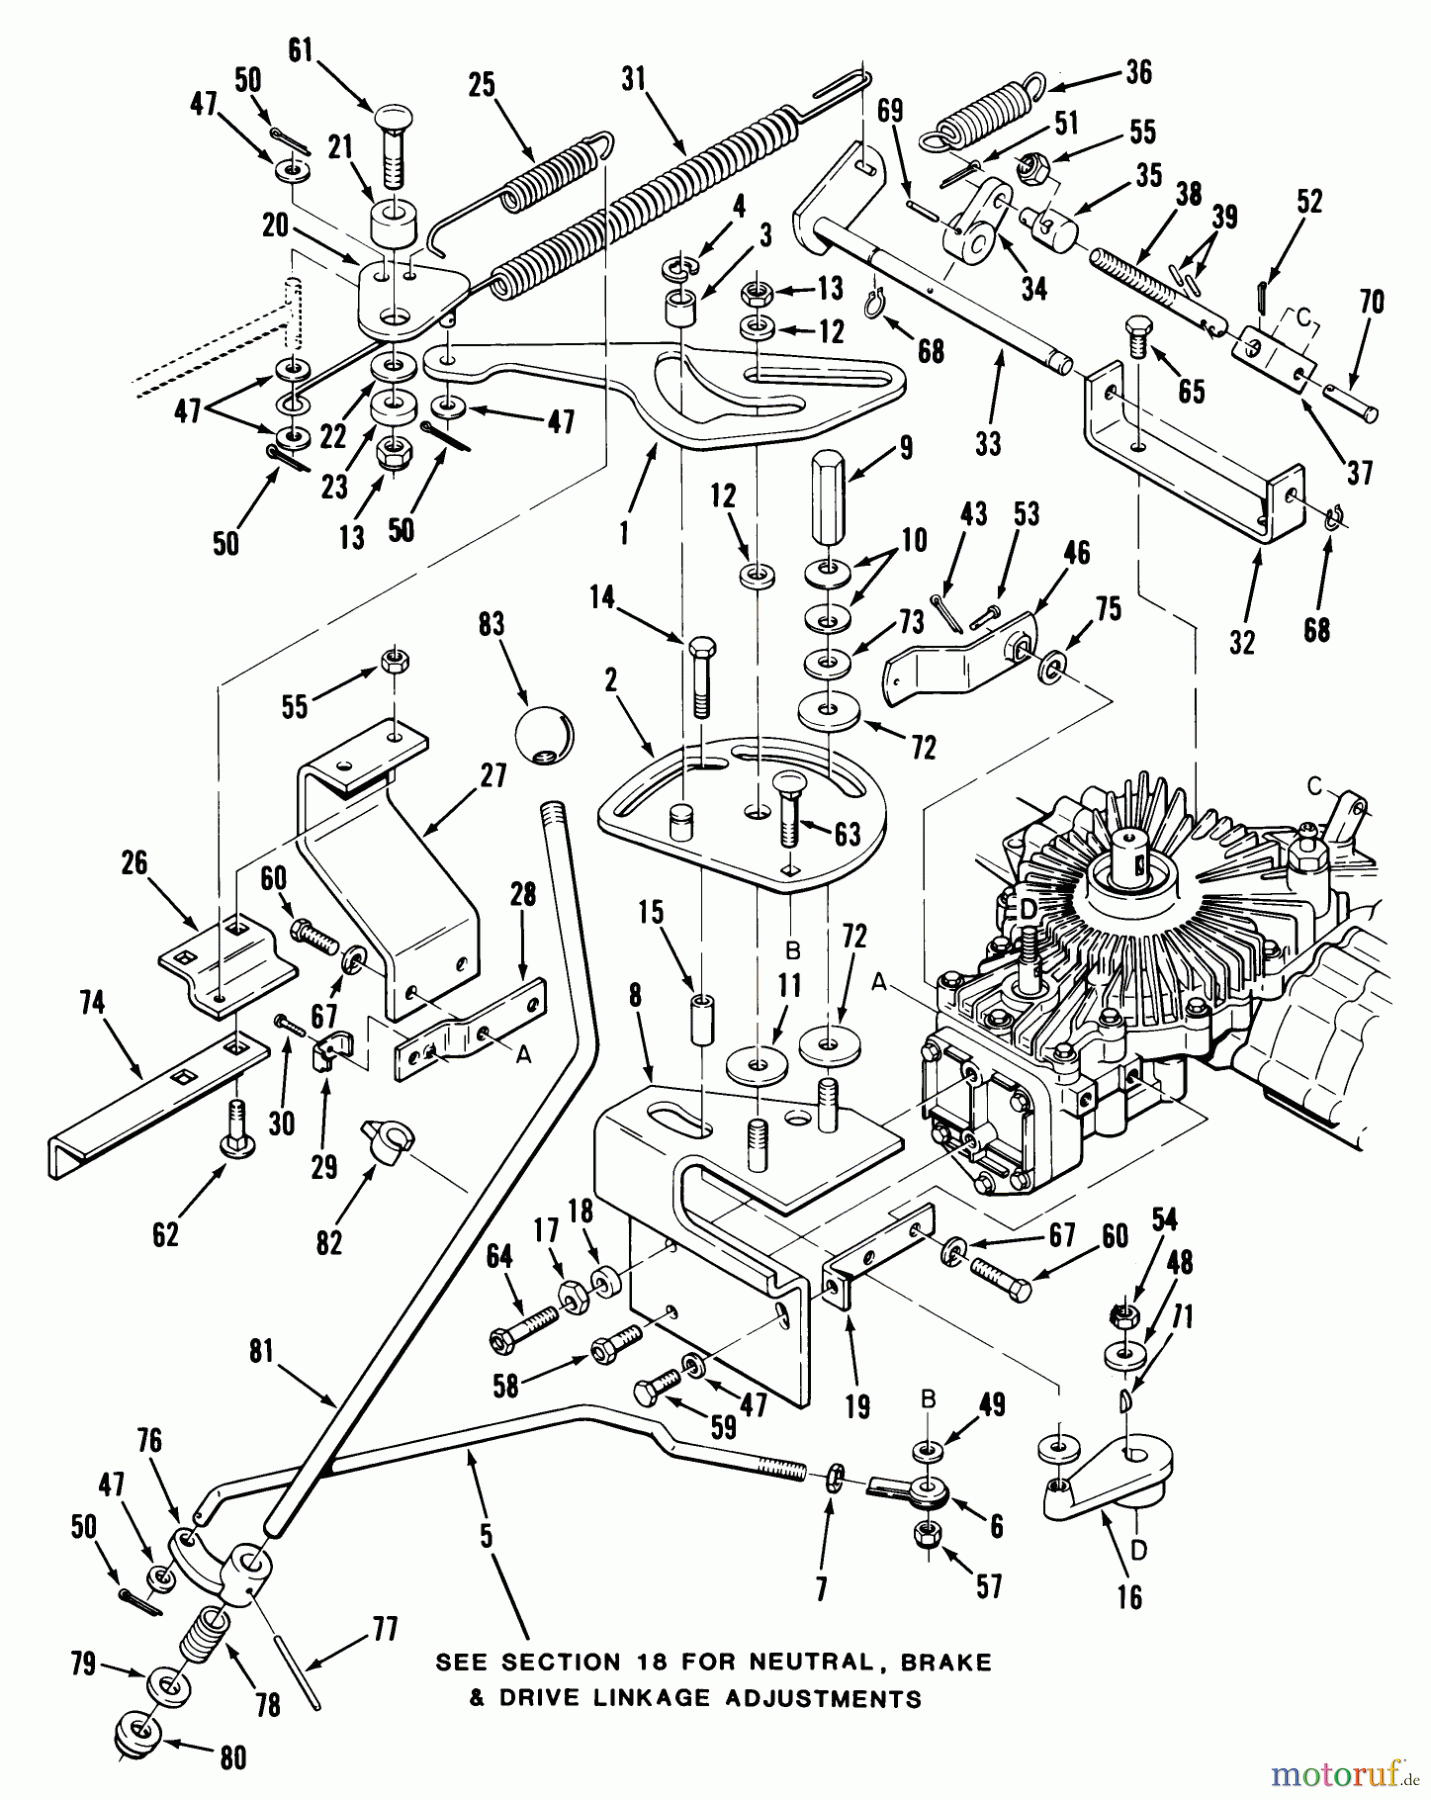  Toro Neu Mowers, Lawn & Garden Tractor Seite 1 32-12B501 (212-5) - Toro 212-5 Tractor, 1989 HYDROSTATIC TRANSAXLE-CONTROL LINKAGE